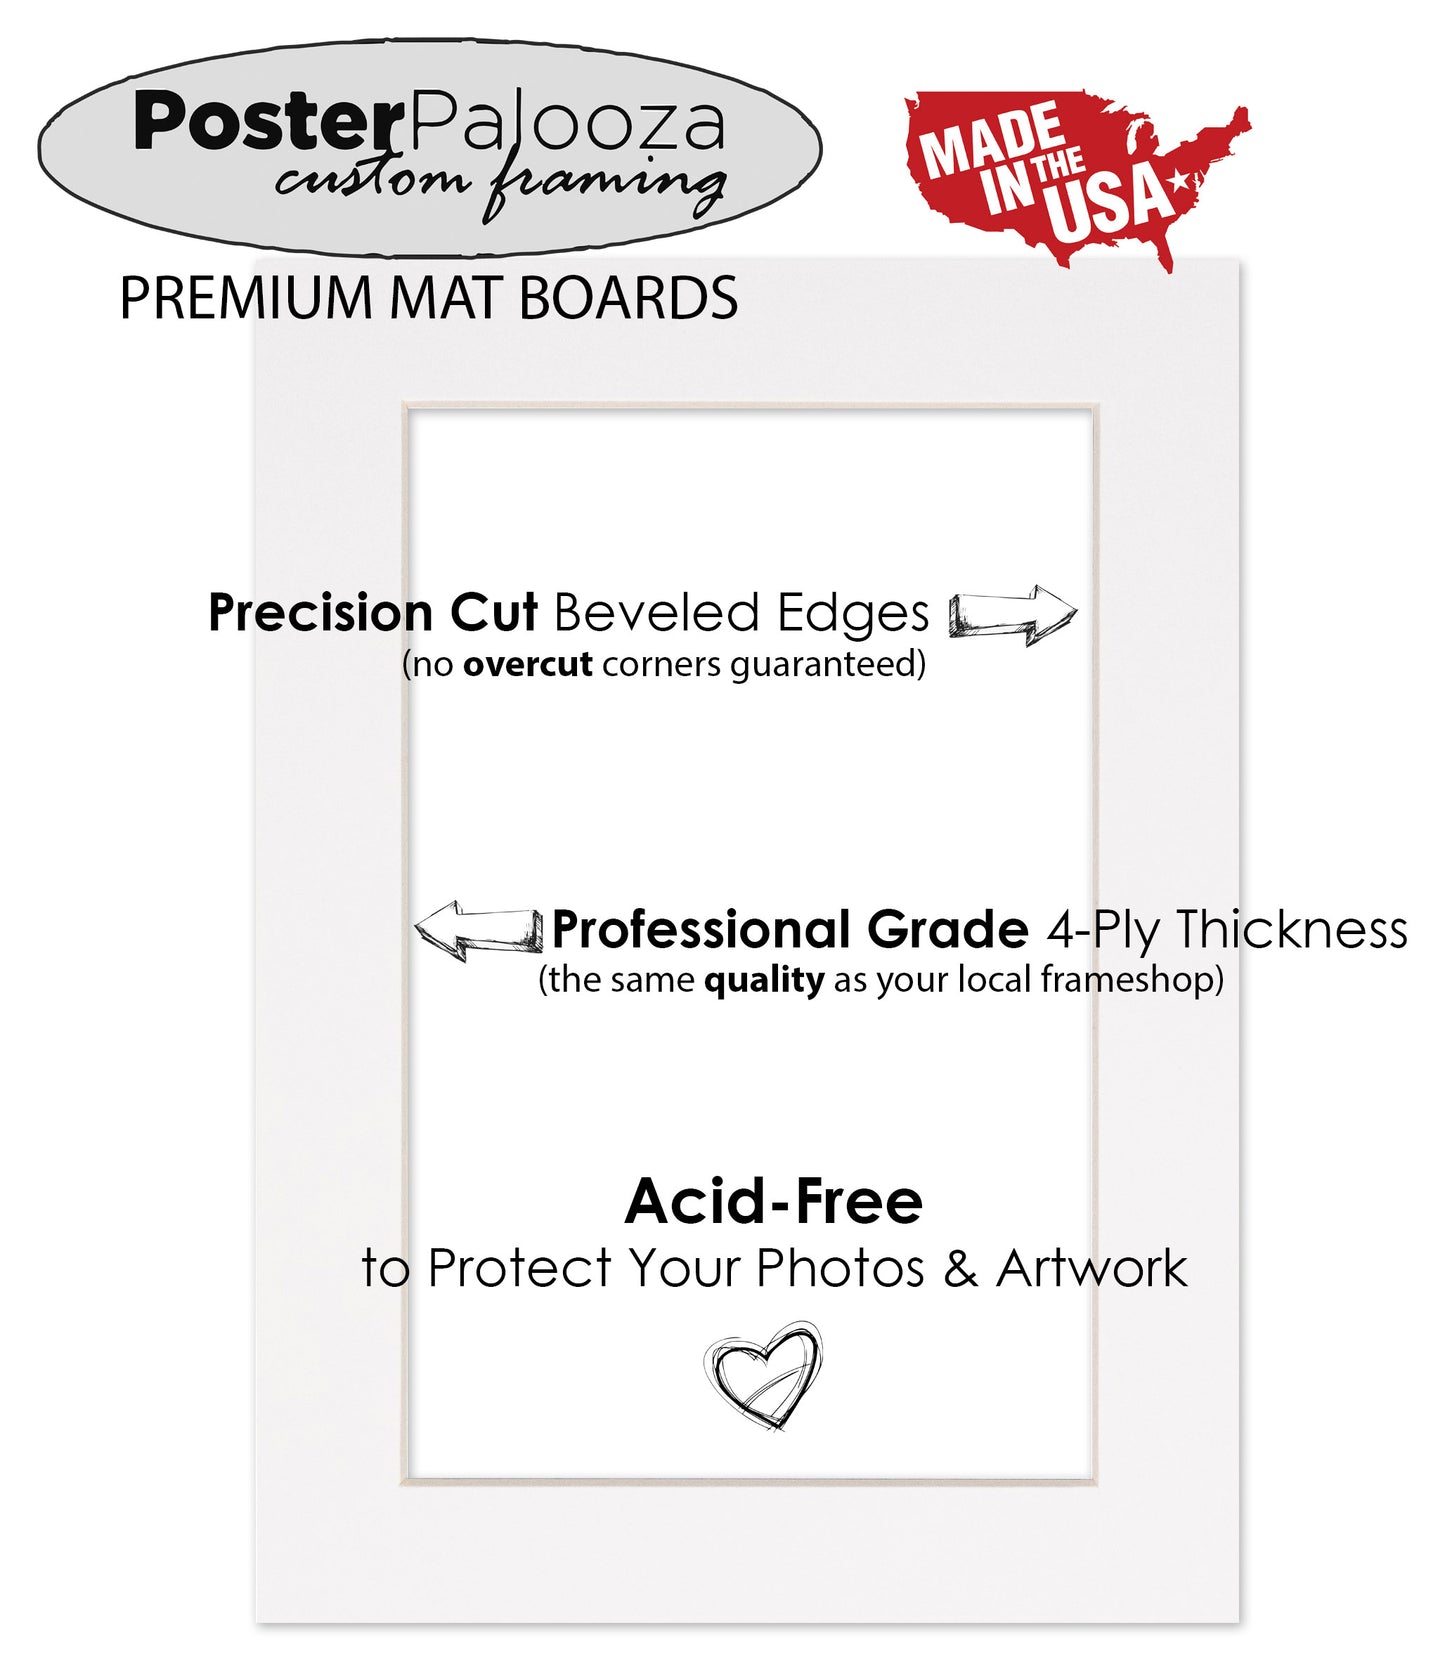 Pack of 25 Metallic Silver Precut Acid-Free Matboards